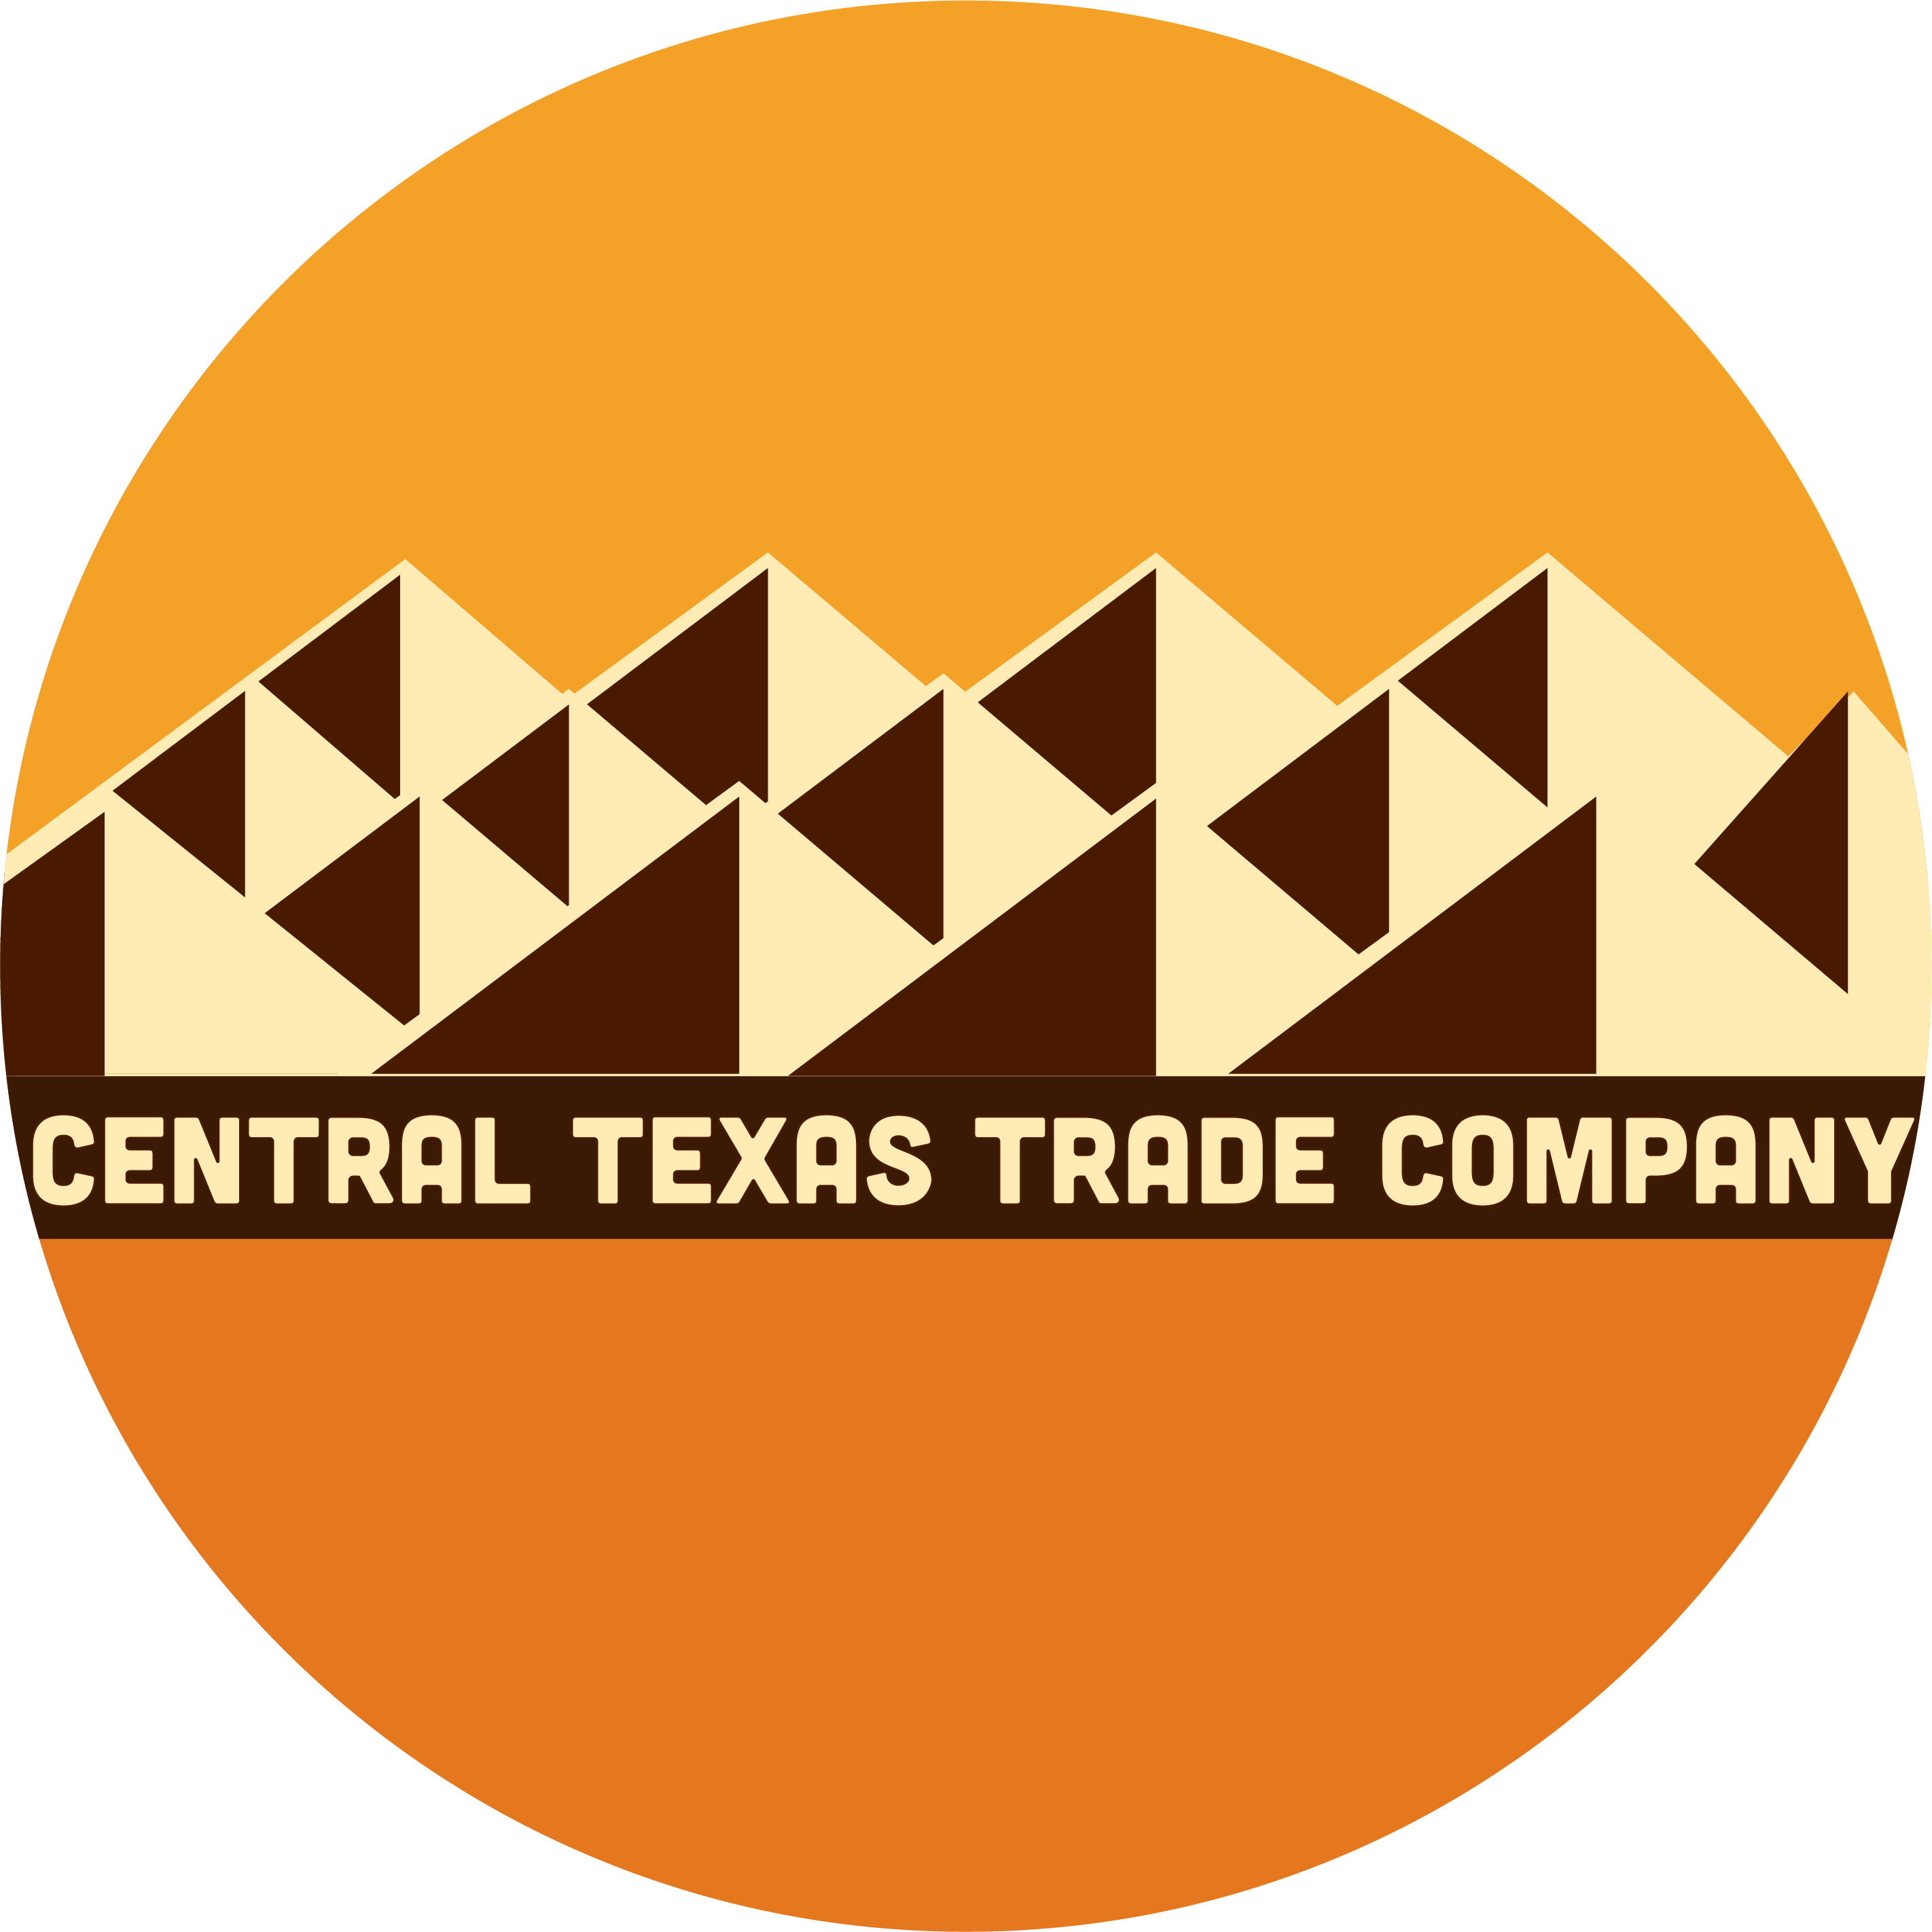 Central Texas Trade Company